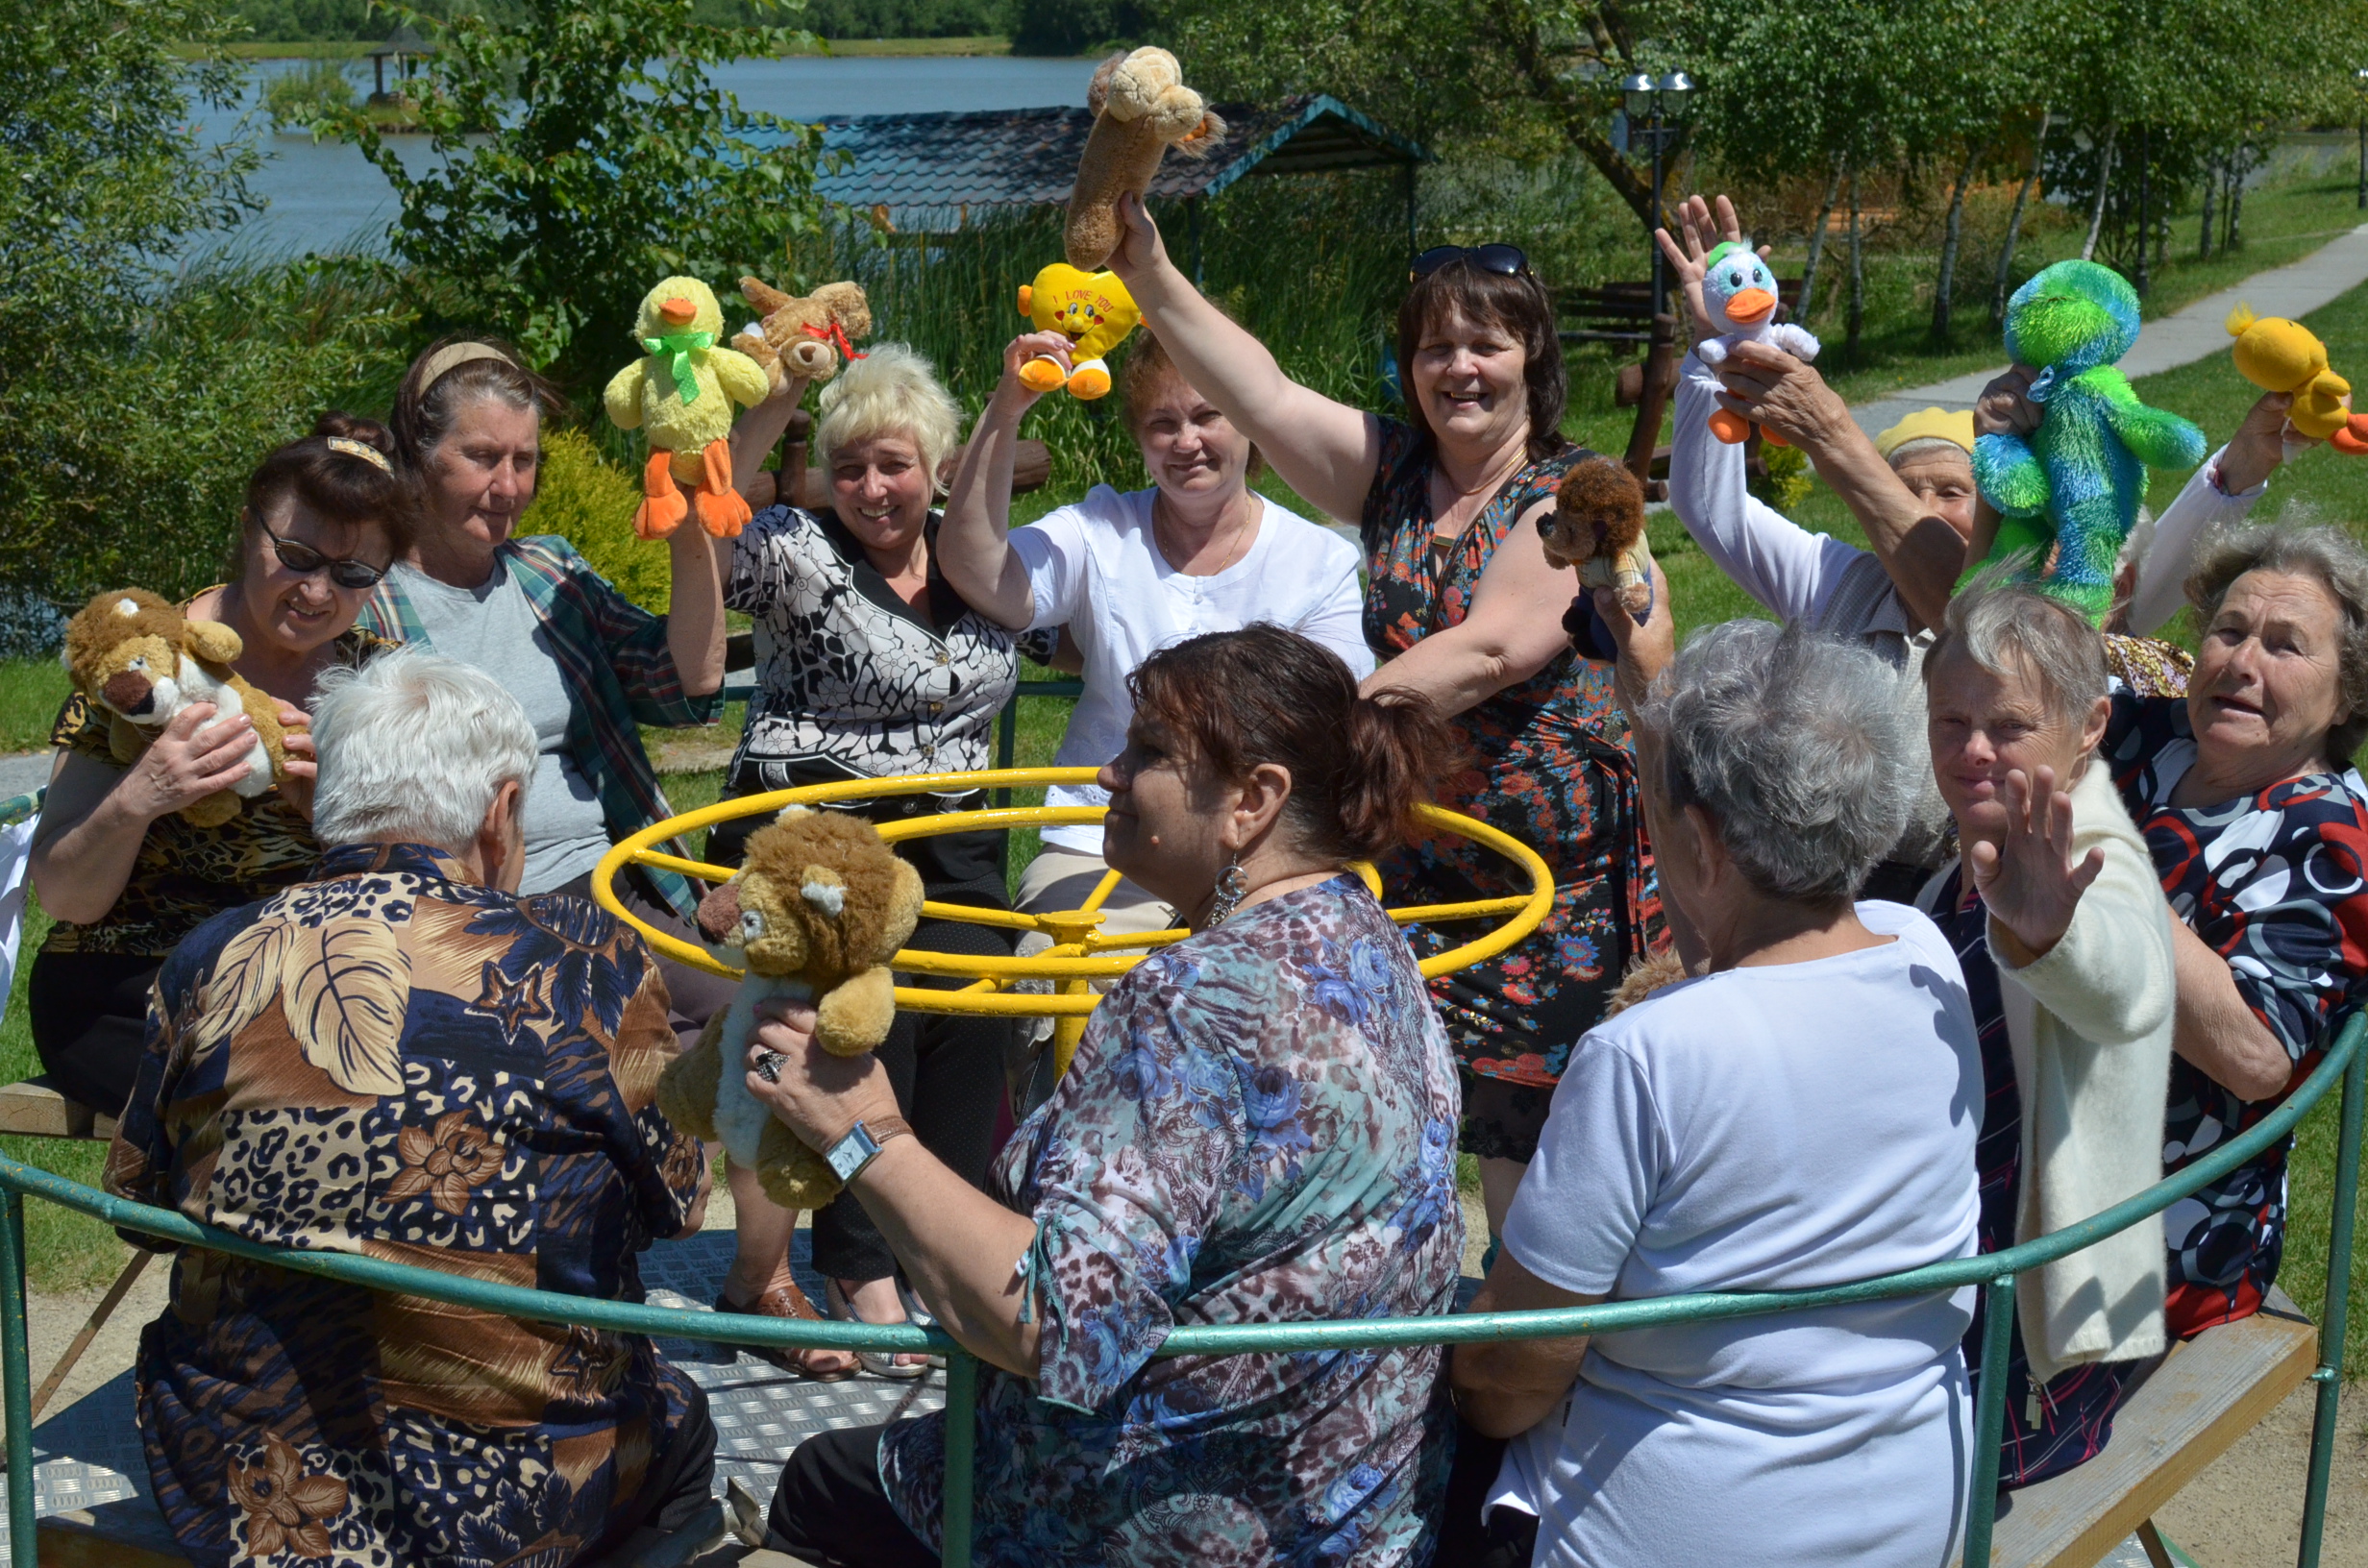  The elderly ladies had a blast on the merry-go-round! 